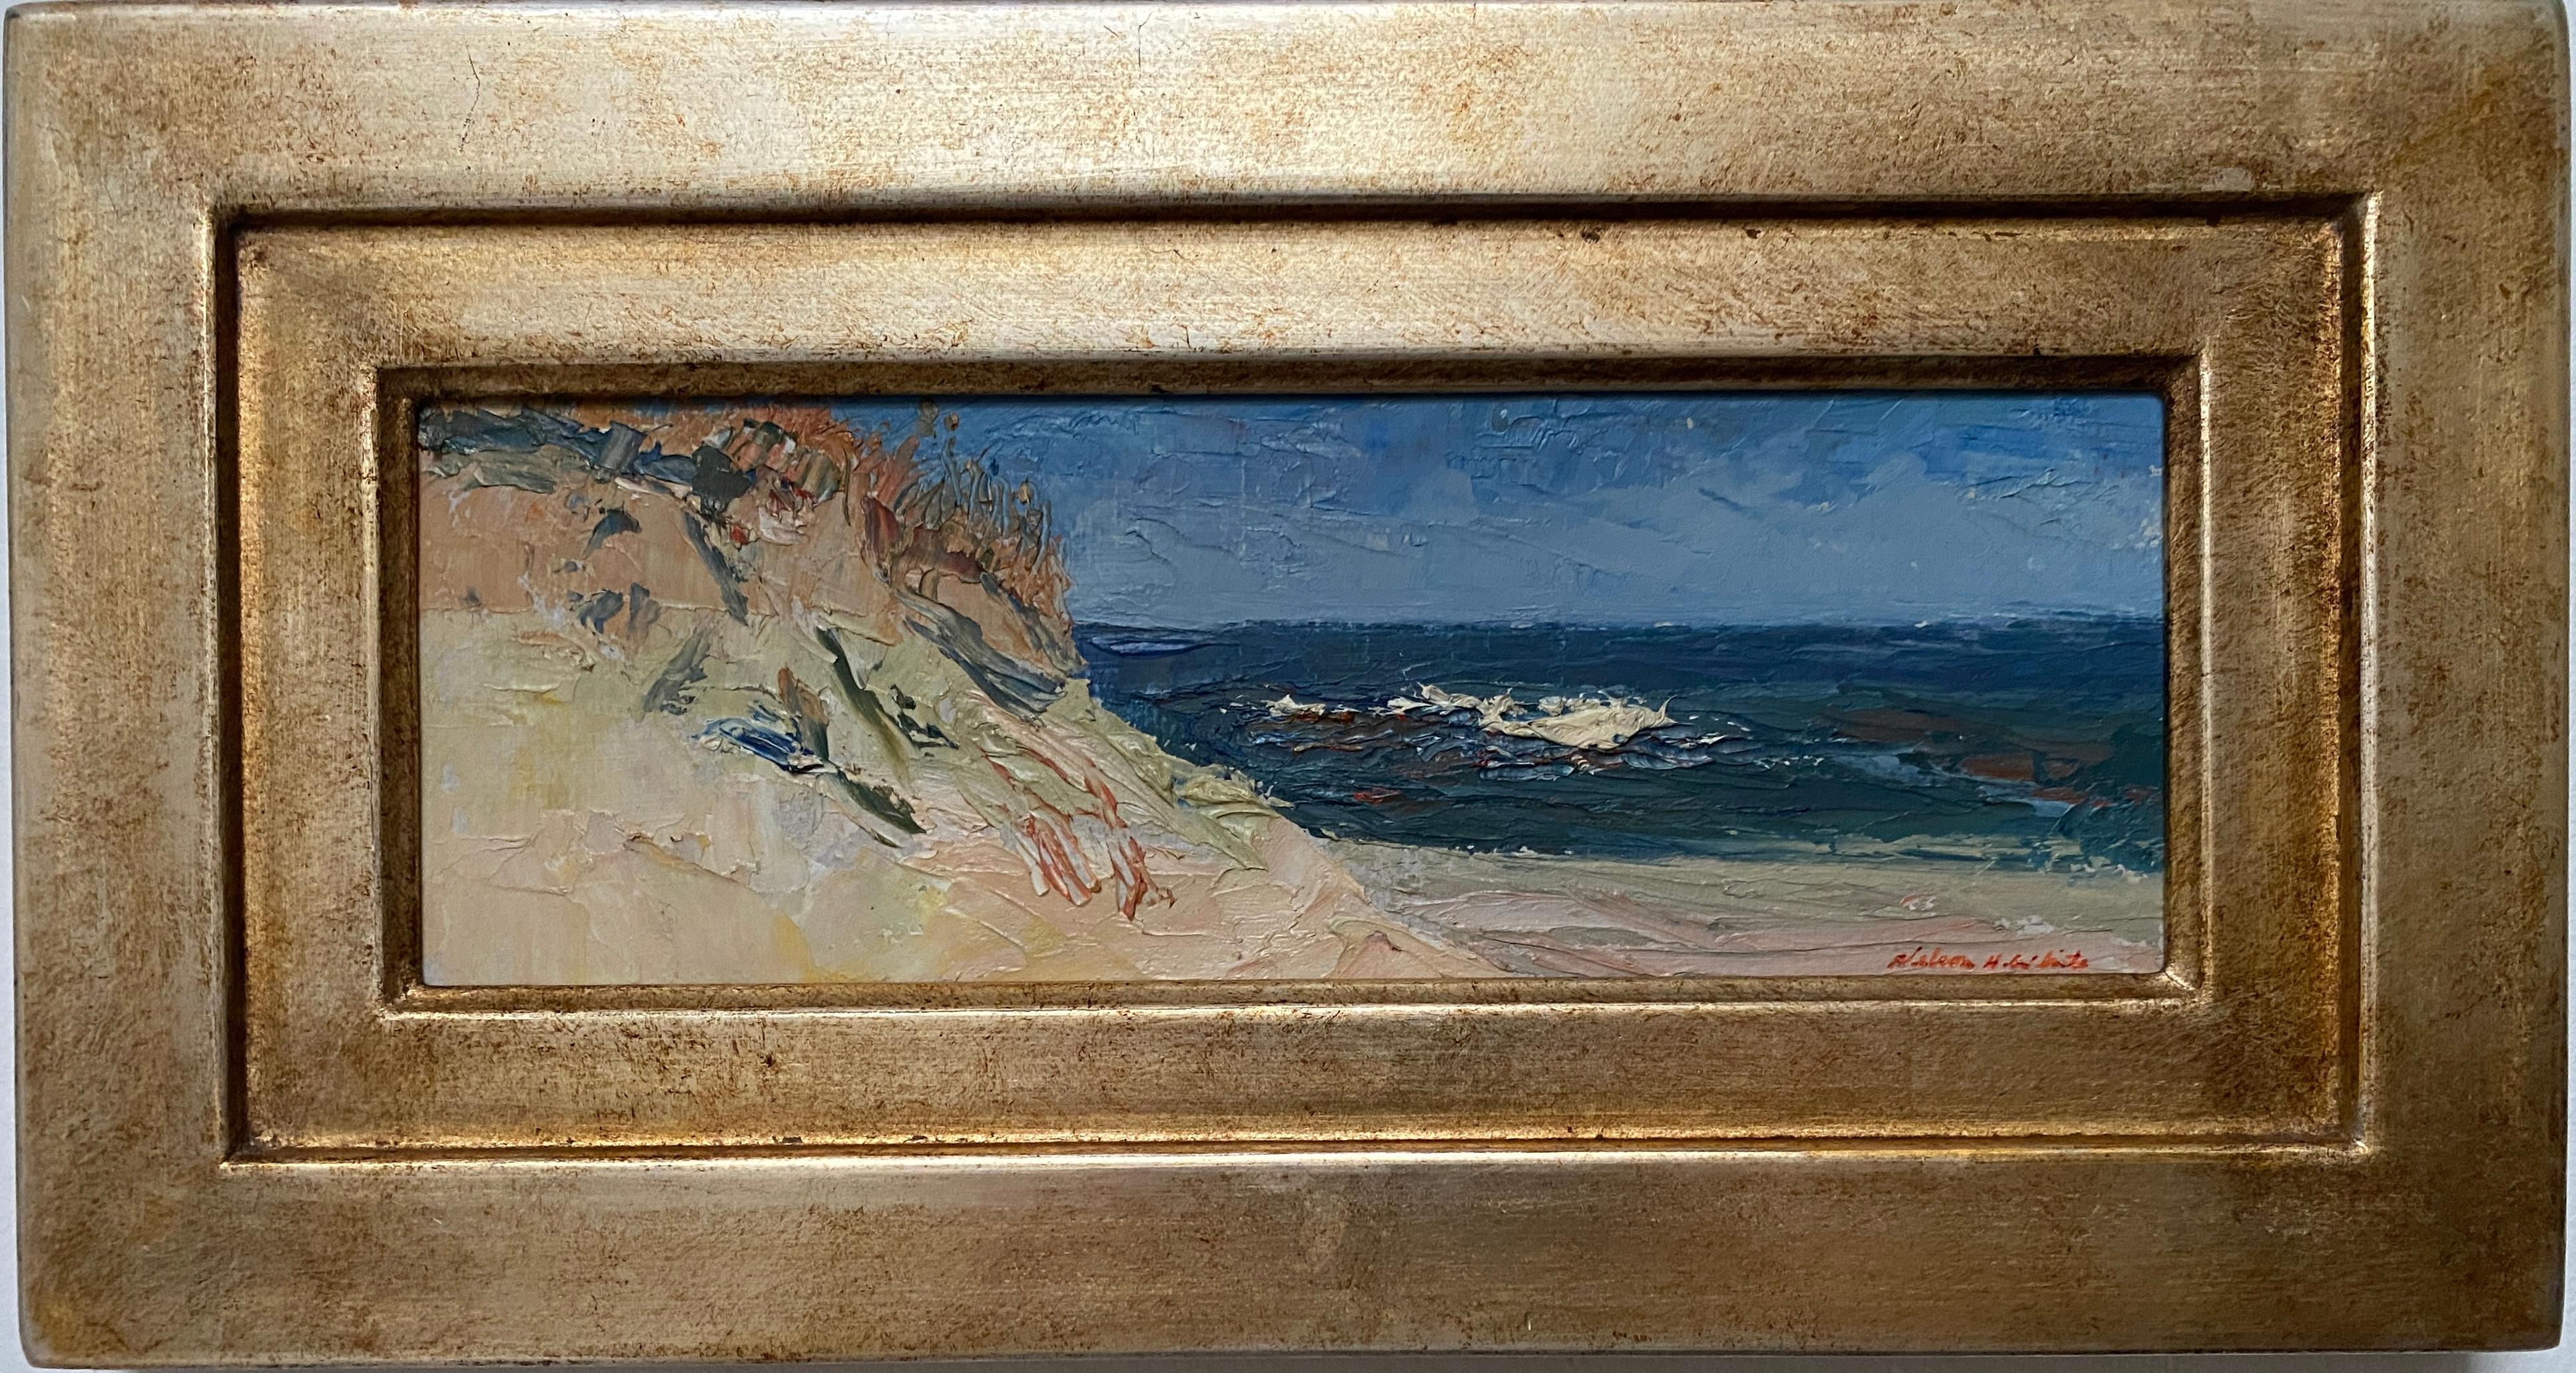 Landscape Painting Nelson White - "Cooper's Beach Long Island 12.17.2021 Southampton, NY, paysage marin impressionniste